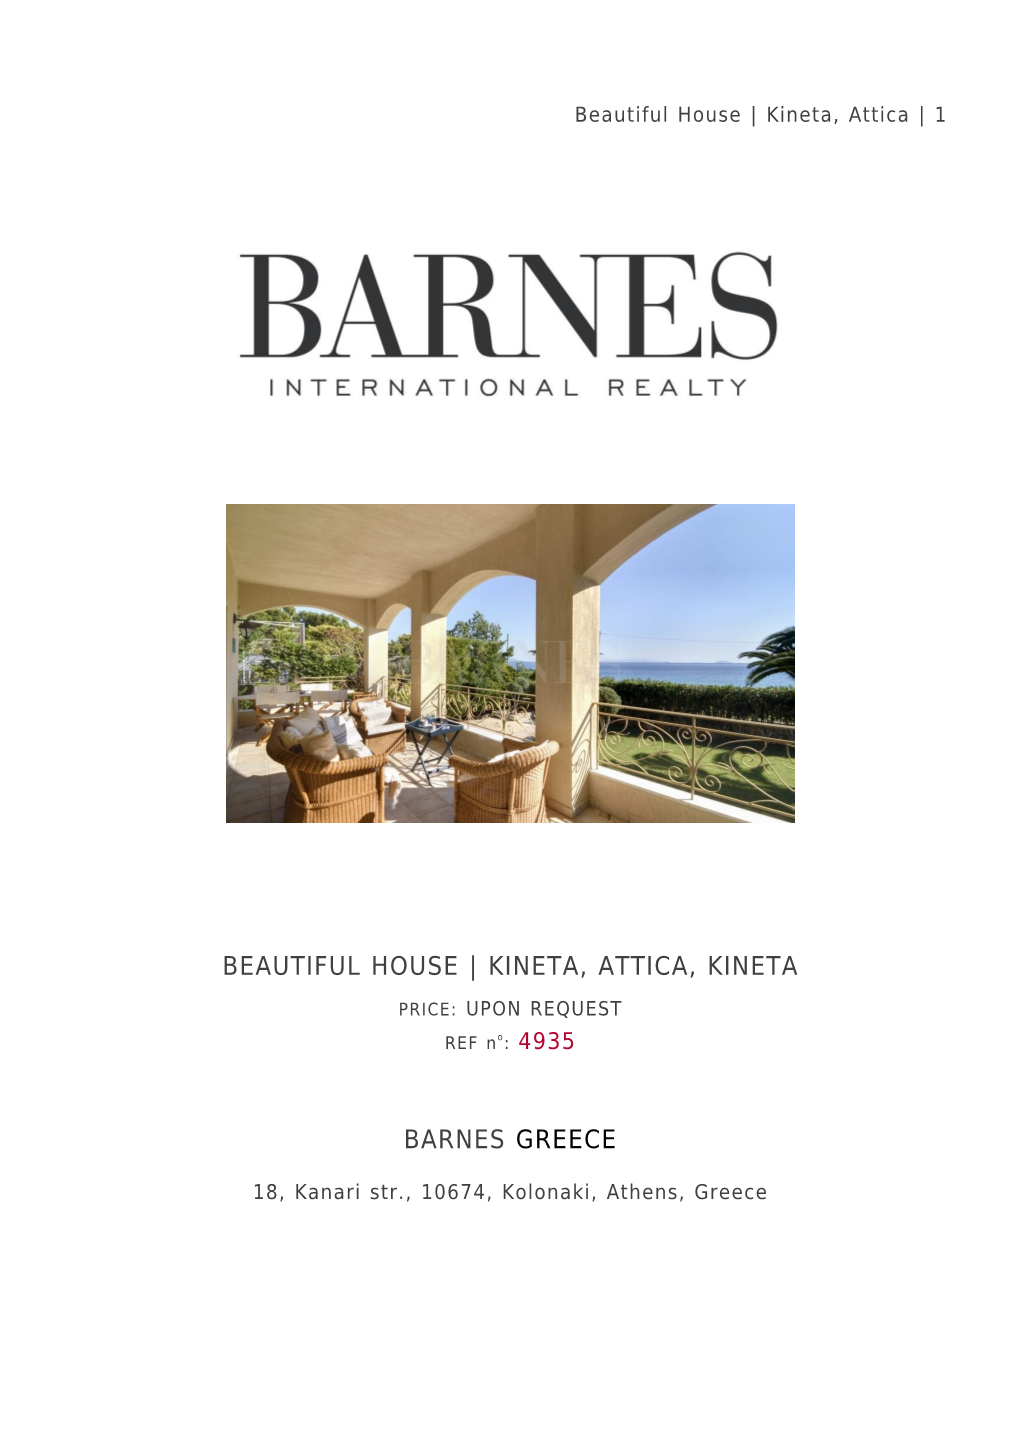 Beautiful House | Kineta, Attica, Kineta Barnes Greece